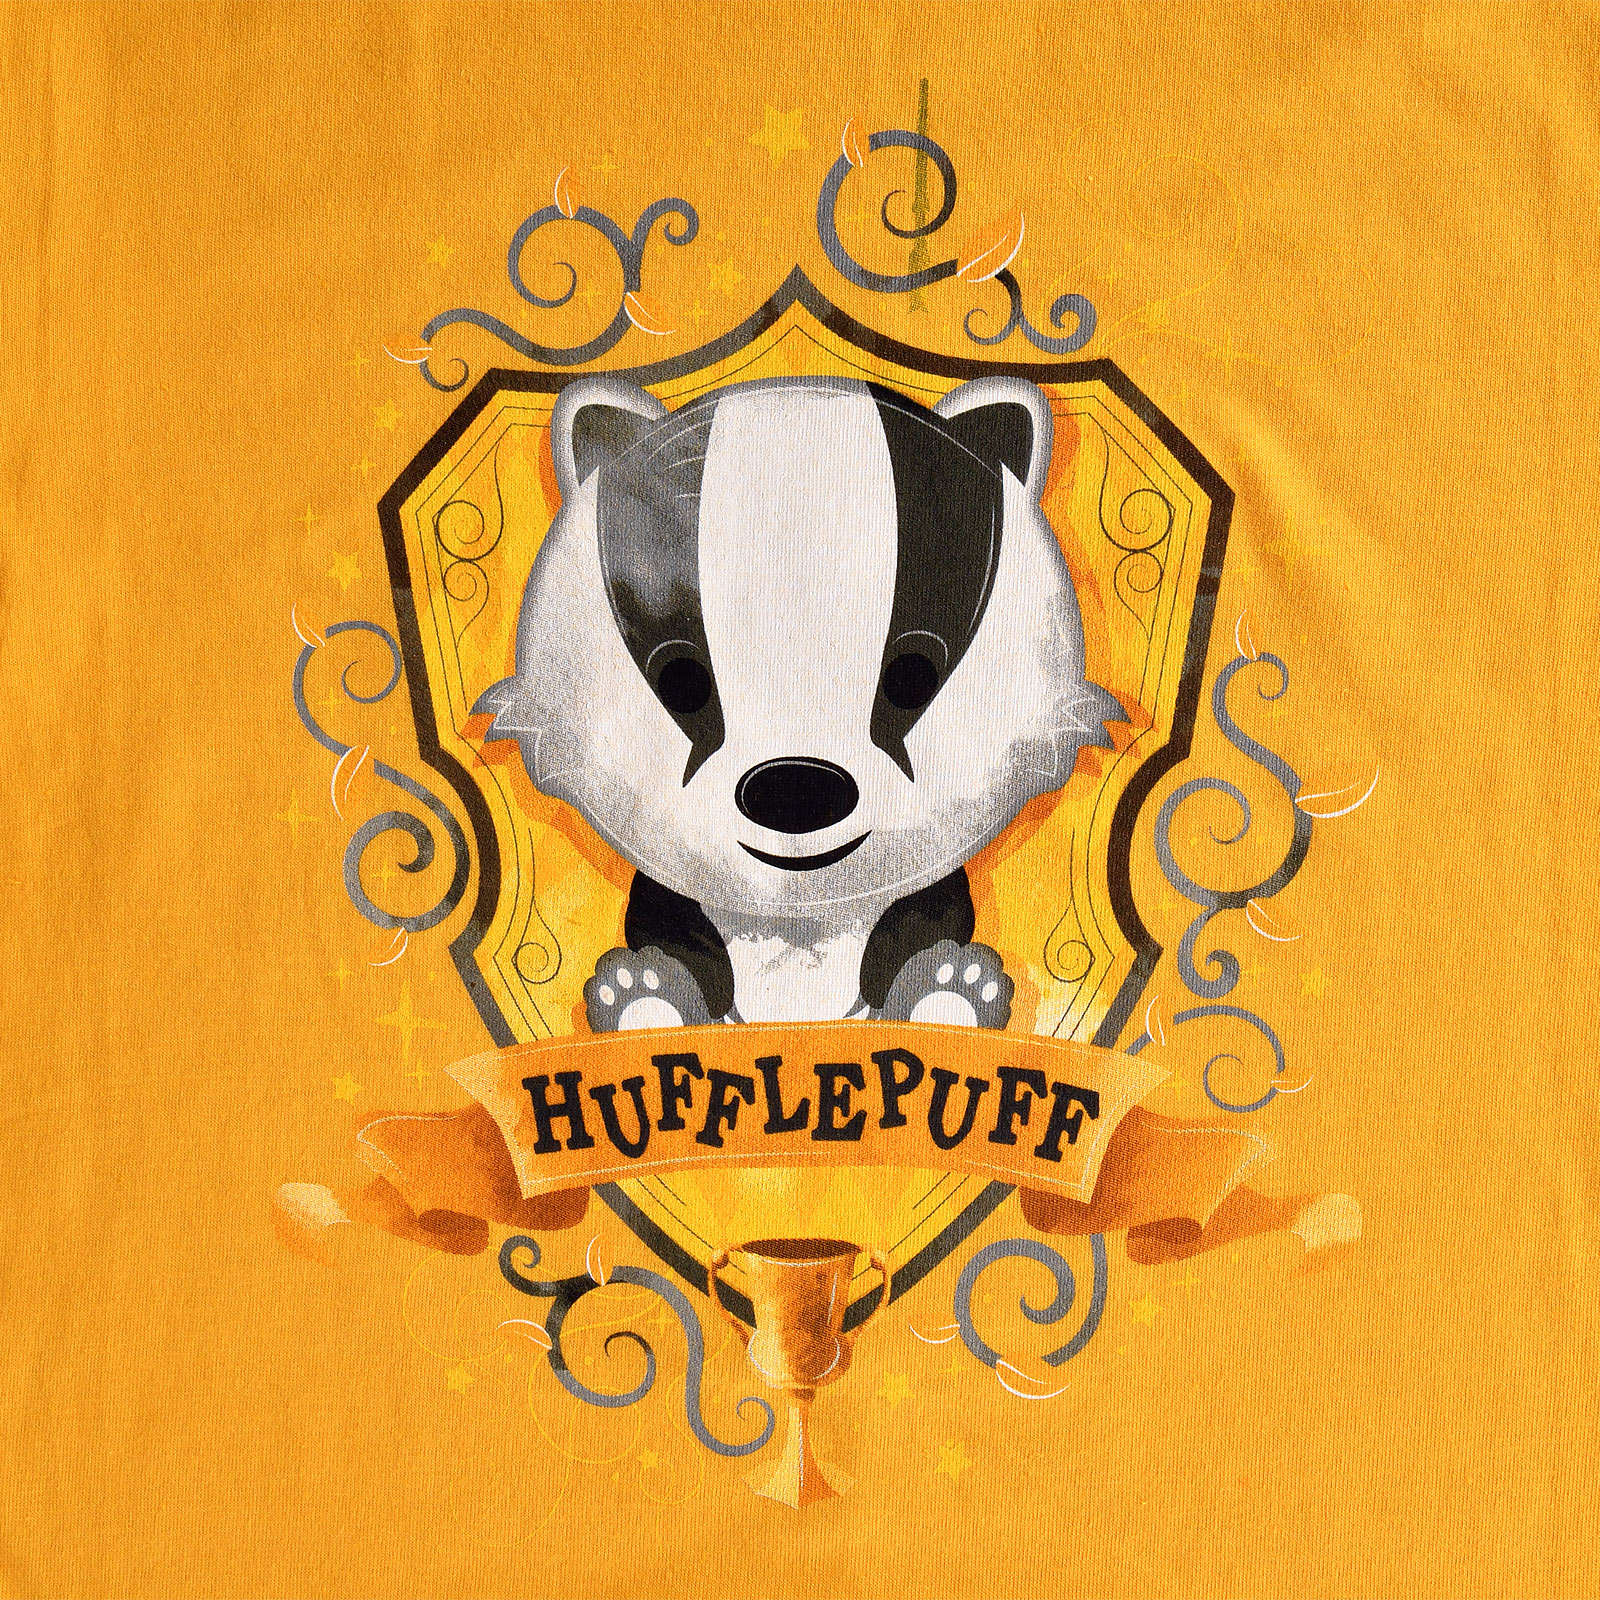 Harry Potter - Magical Hufflepuff T-Shirt Kids yellow